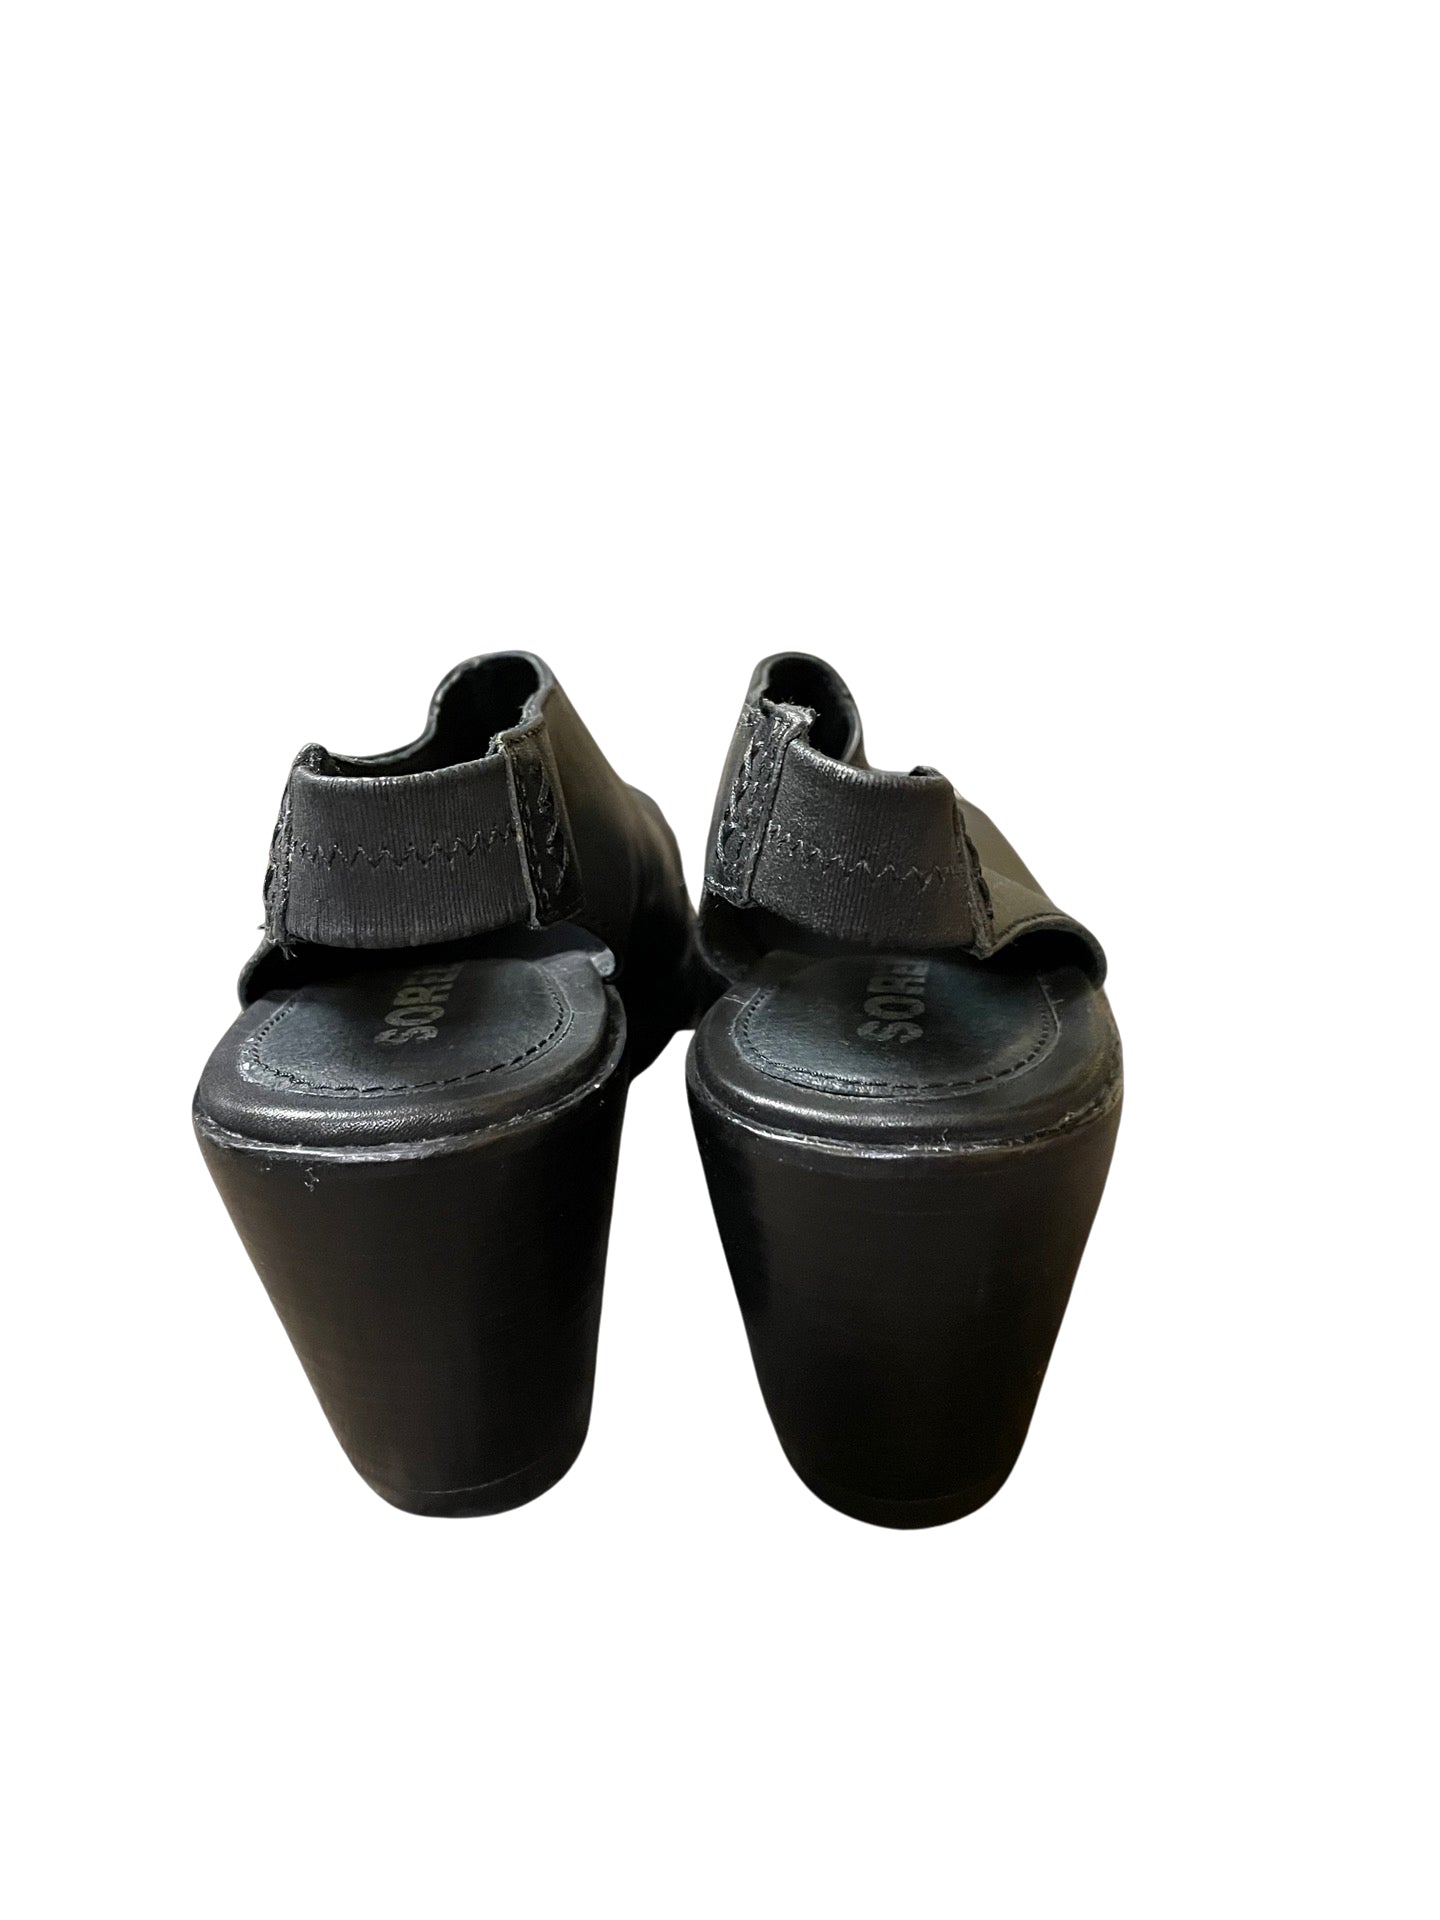 Sorel Size 12 Black Heels